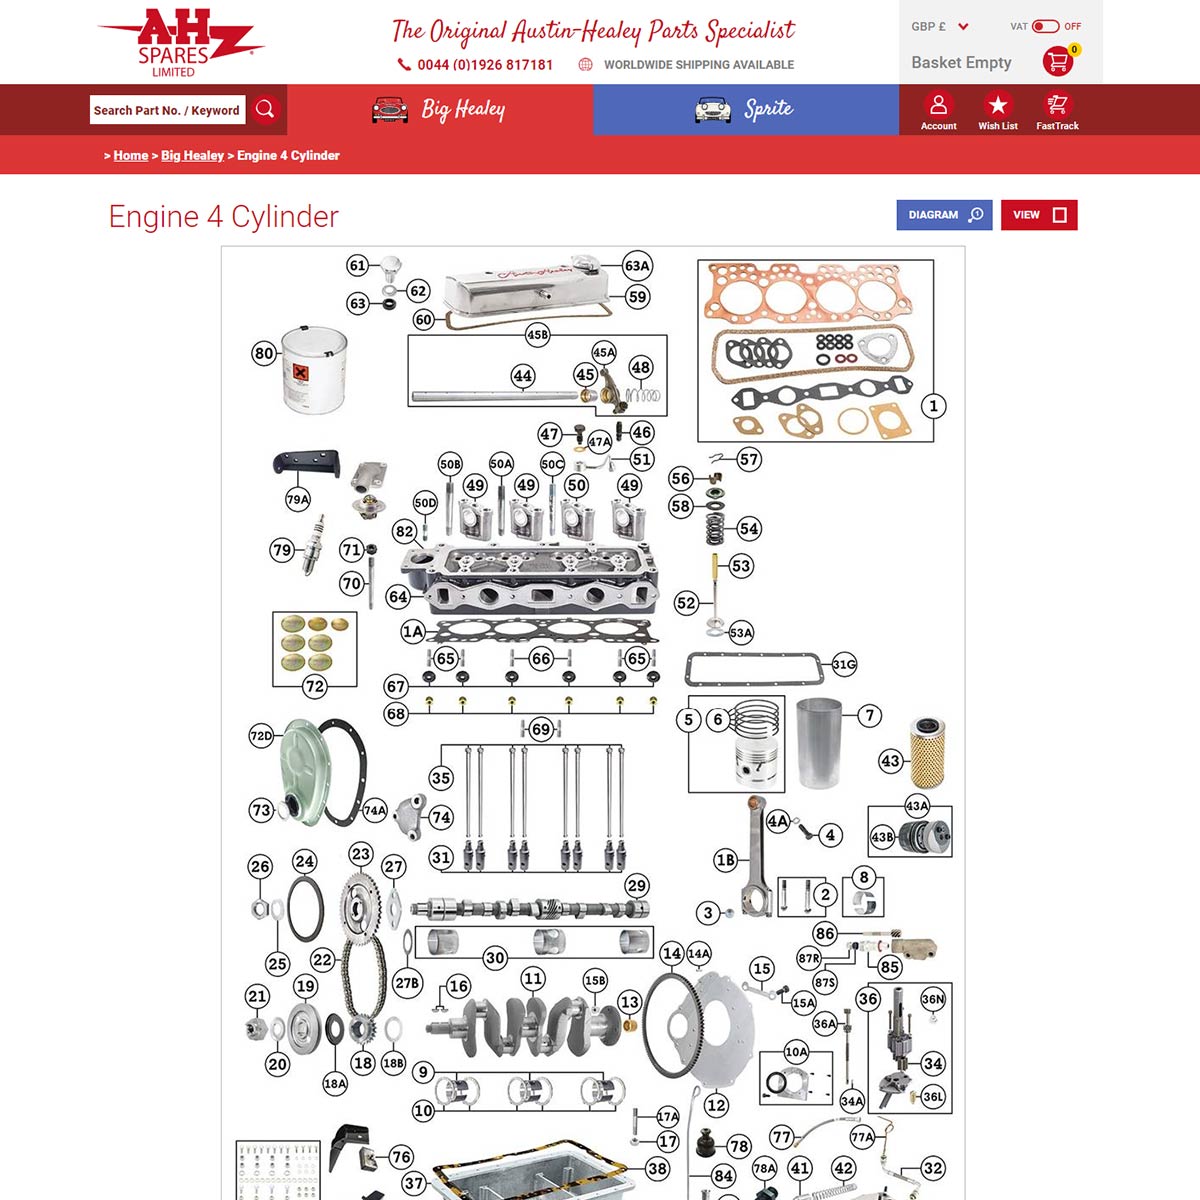 Austin-Healey 4 cylinder engine section diagram.